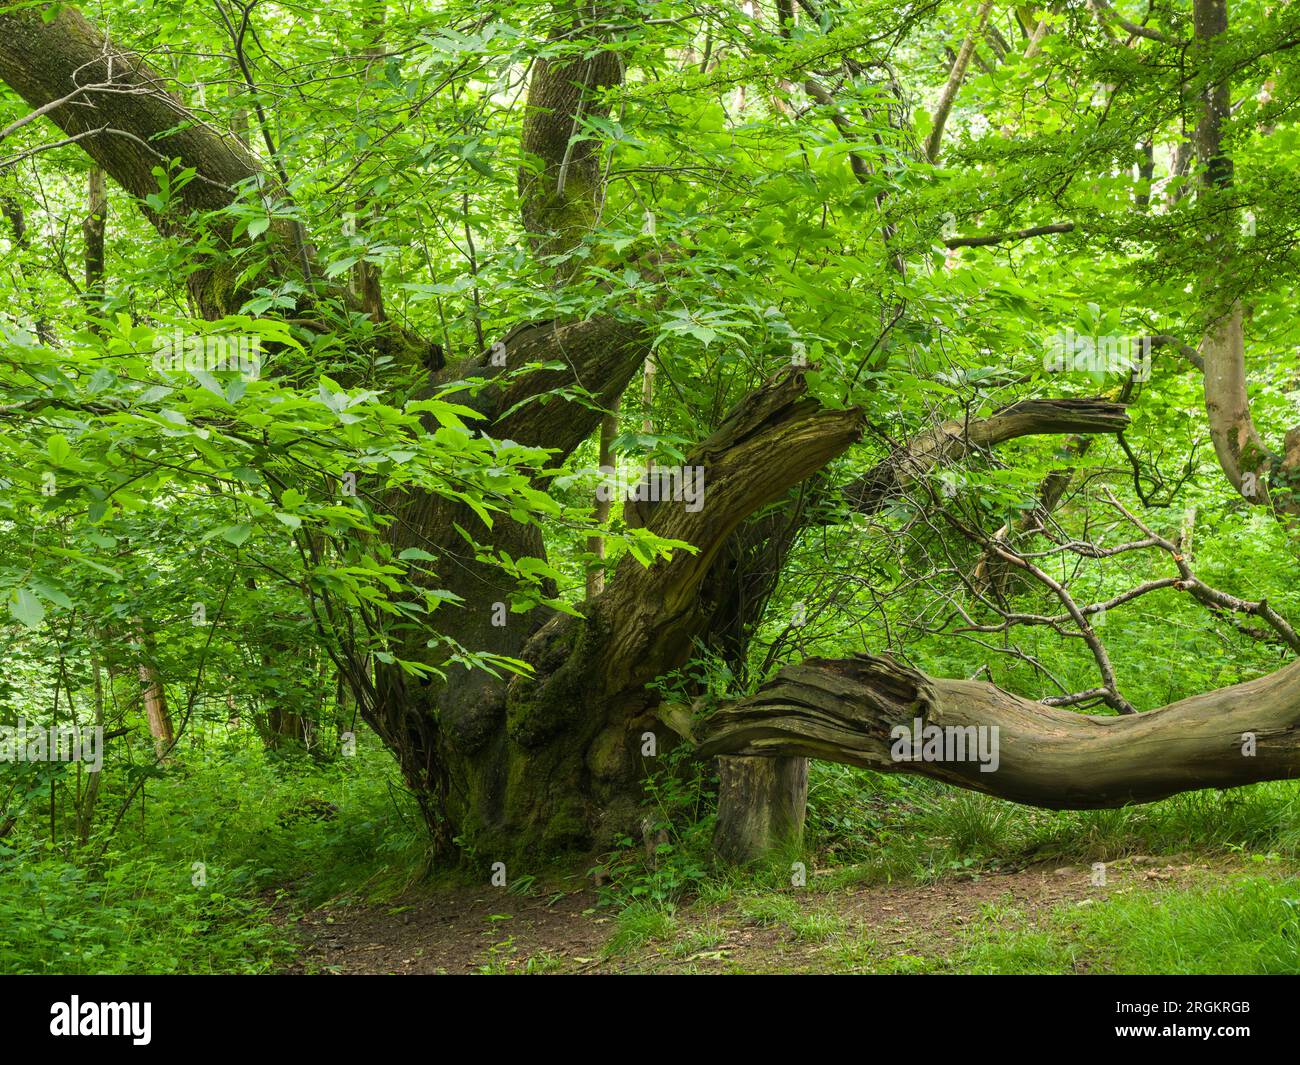 King’s Wood, the ancient broadleaf woodland in the Mendip Hills near Axbridge, Somerset, England. Stock Photo